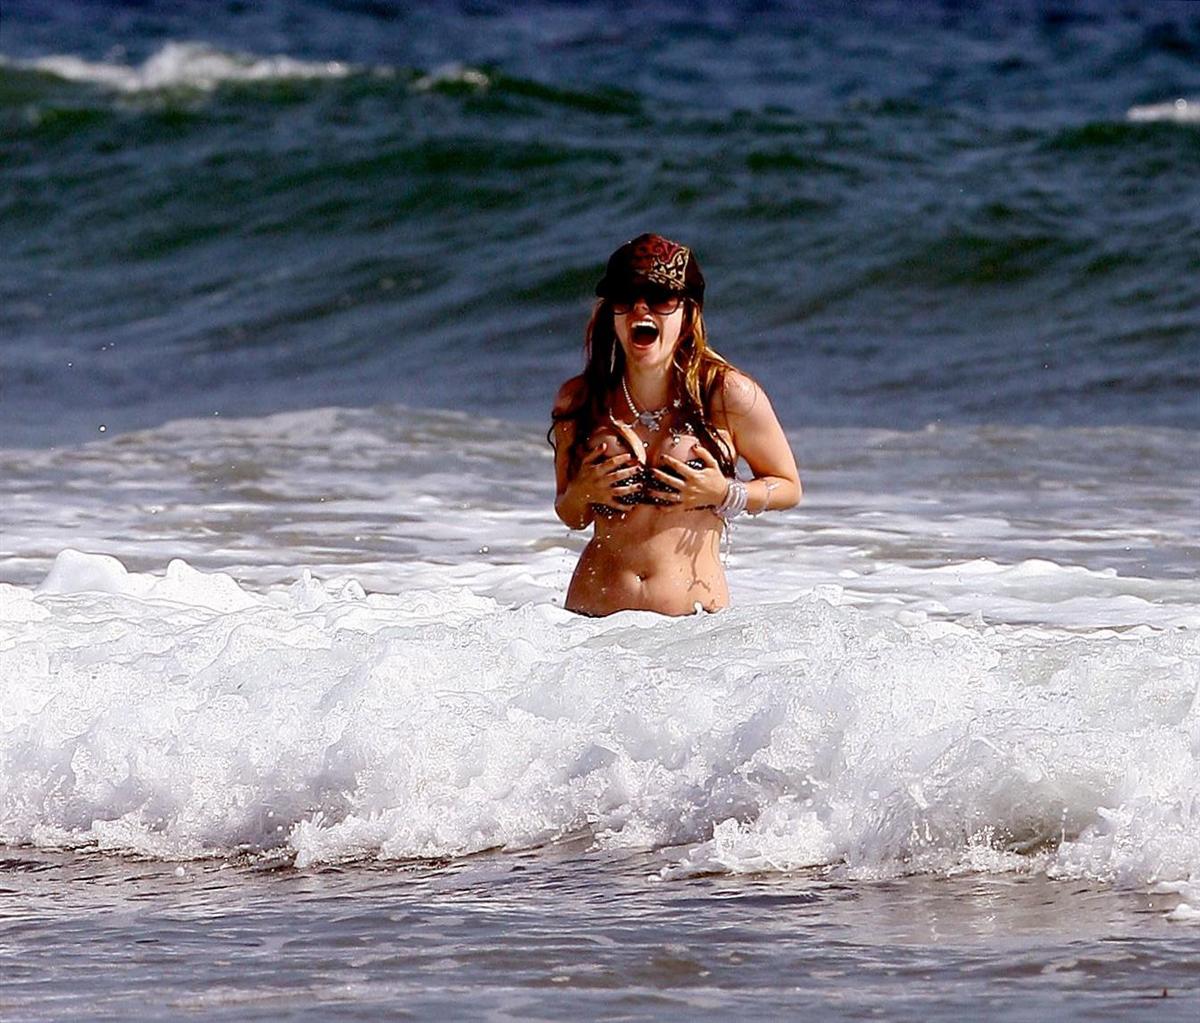 Hot chick posing in her bikini